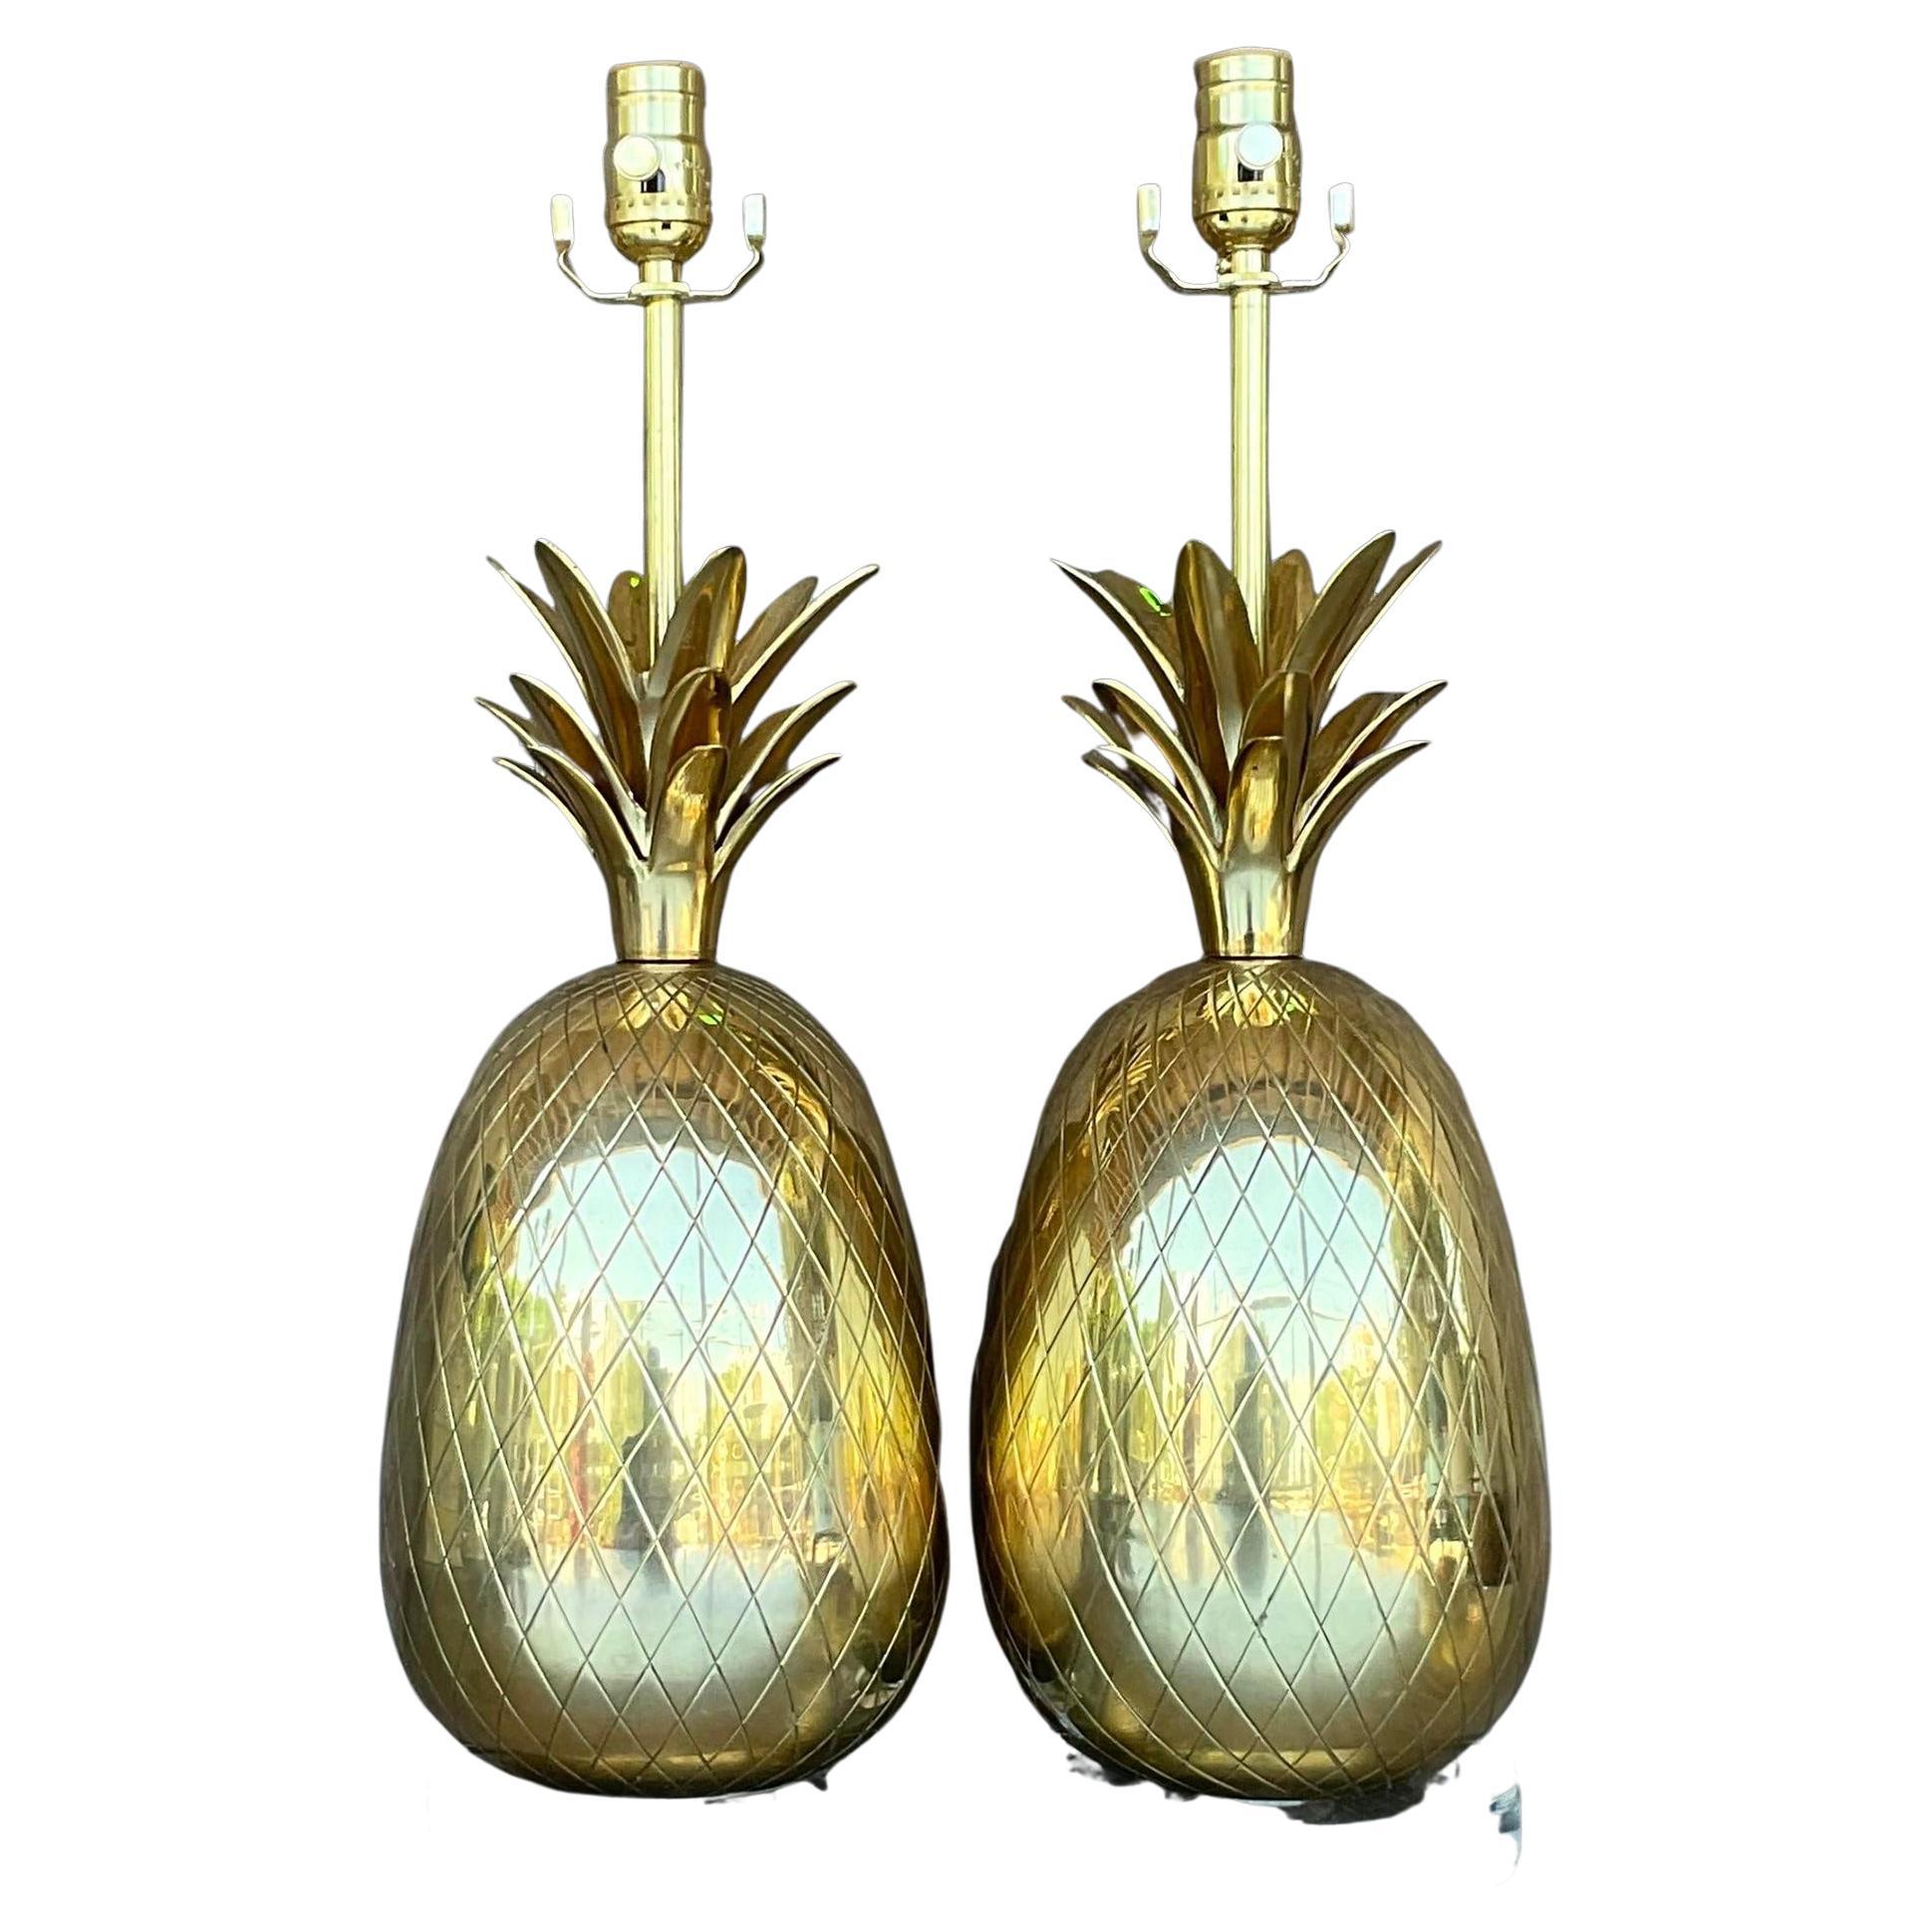 Vintage Regency Brass Pineapple Lamps - a Pair